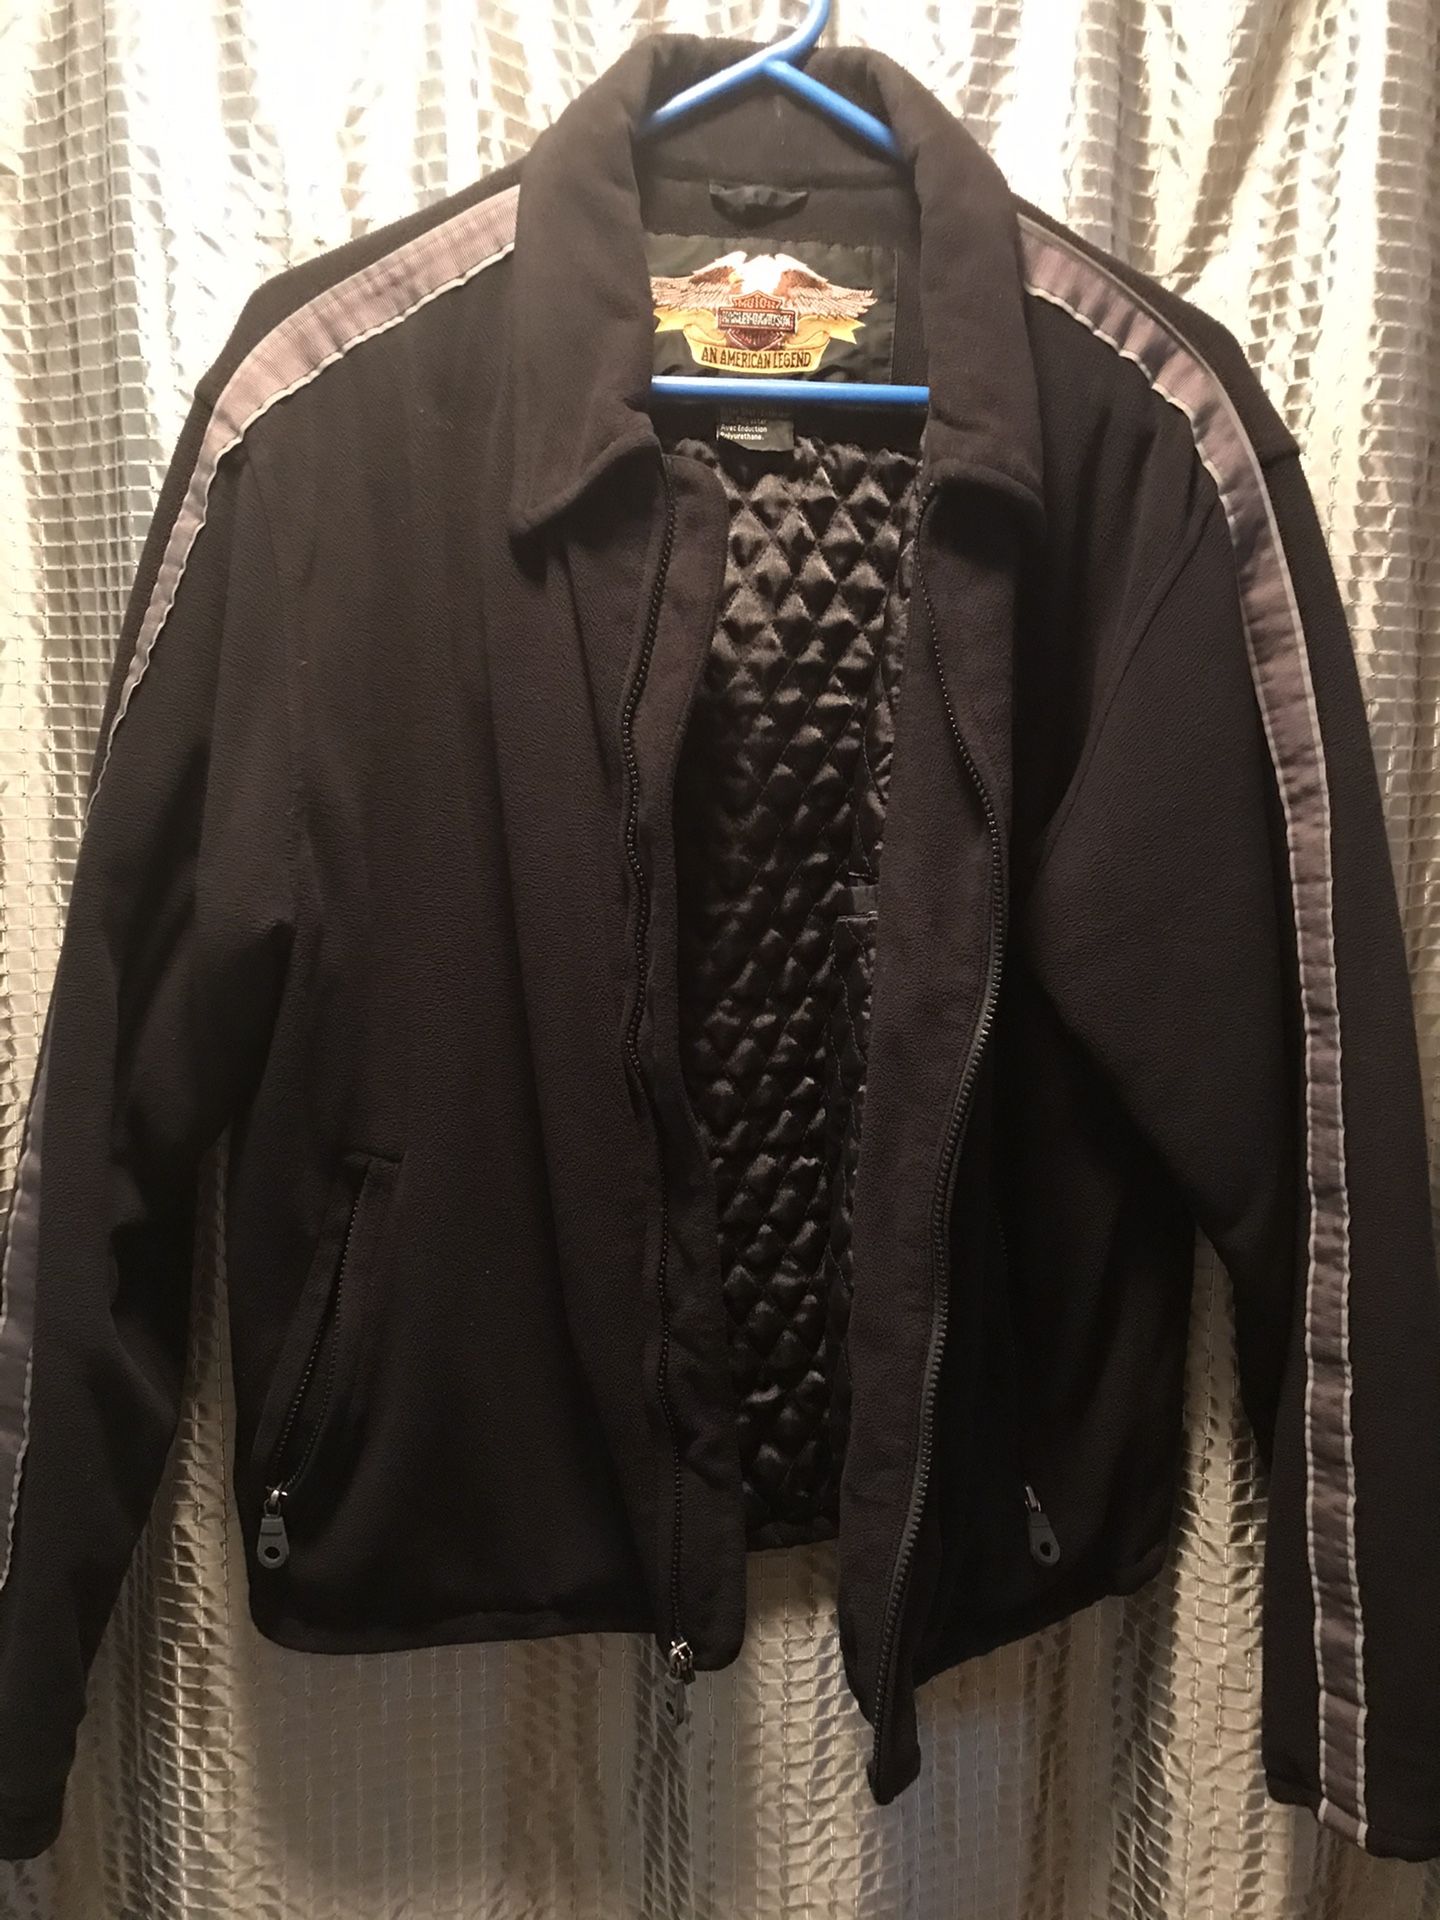 Harley Davidson Fleece Jacket